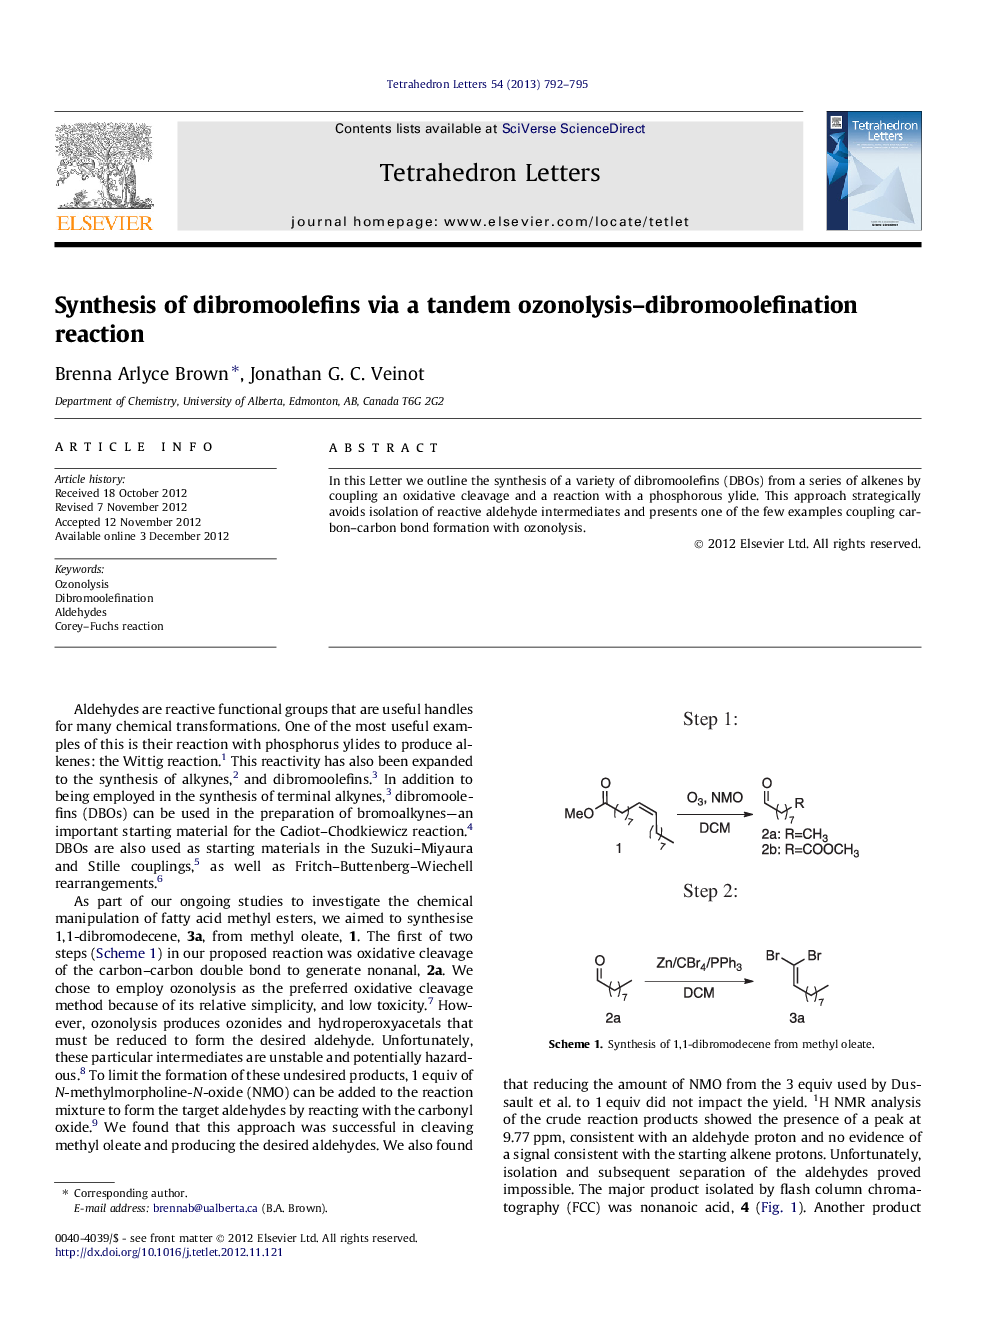 Synthesis of dibromoolefins via a tandem ozonolysis-dibromoolefination reaction